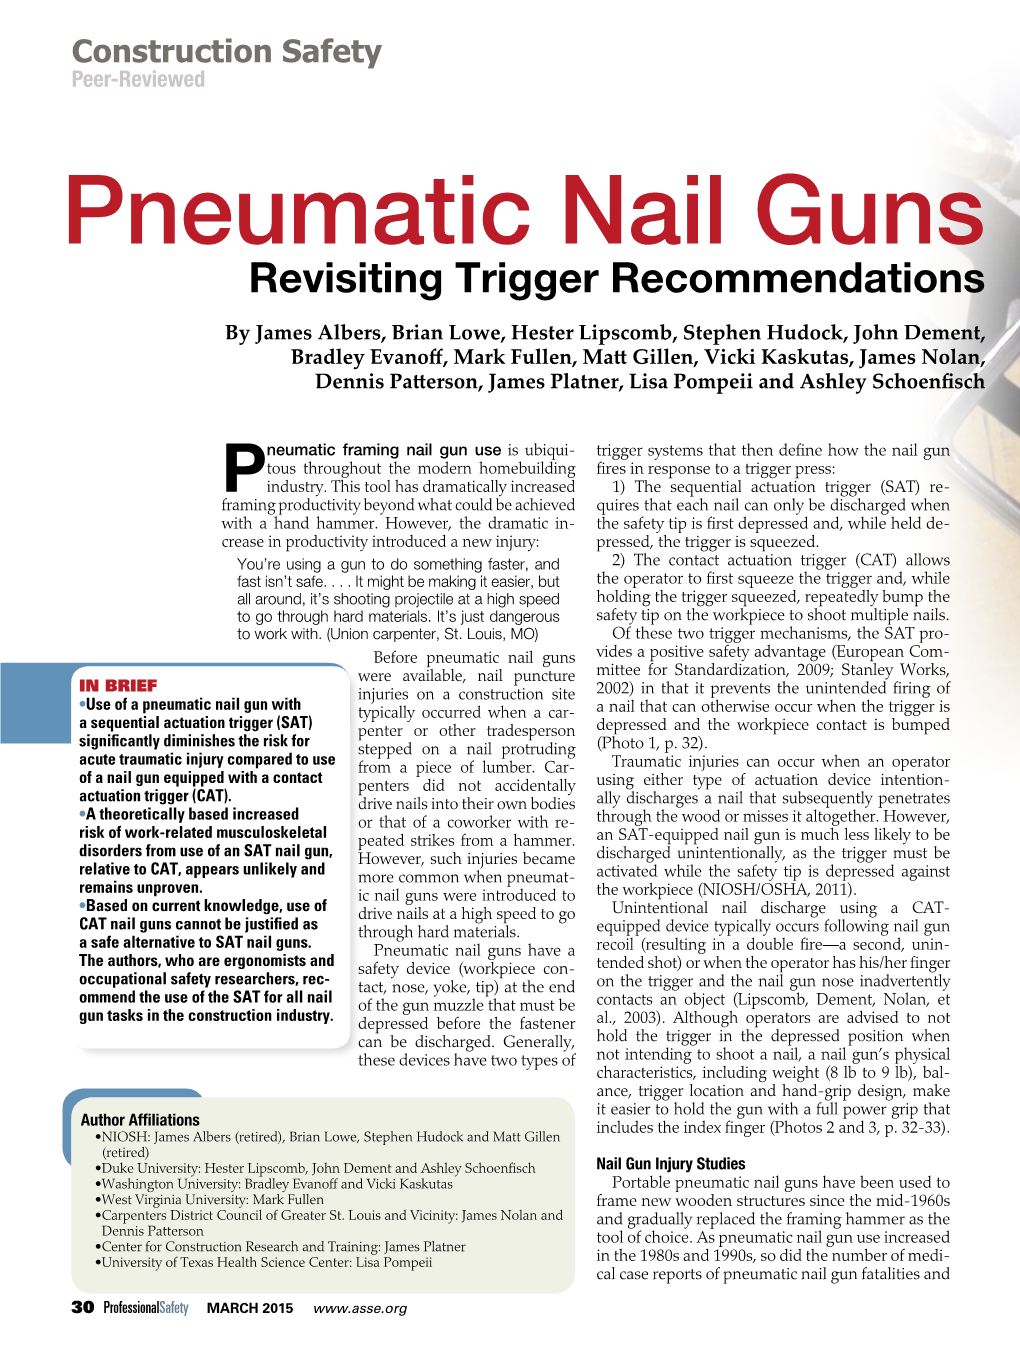 Pneumatic Nail Guns Revisiting Trigger Recommendations